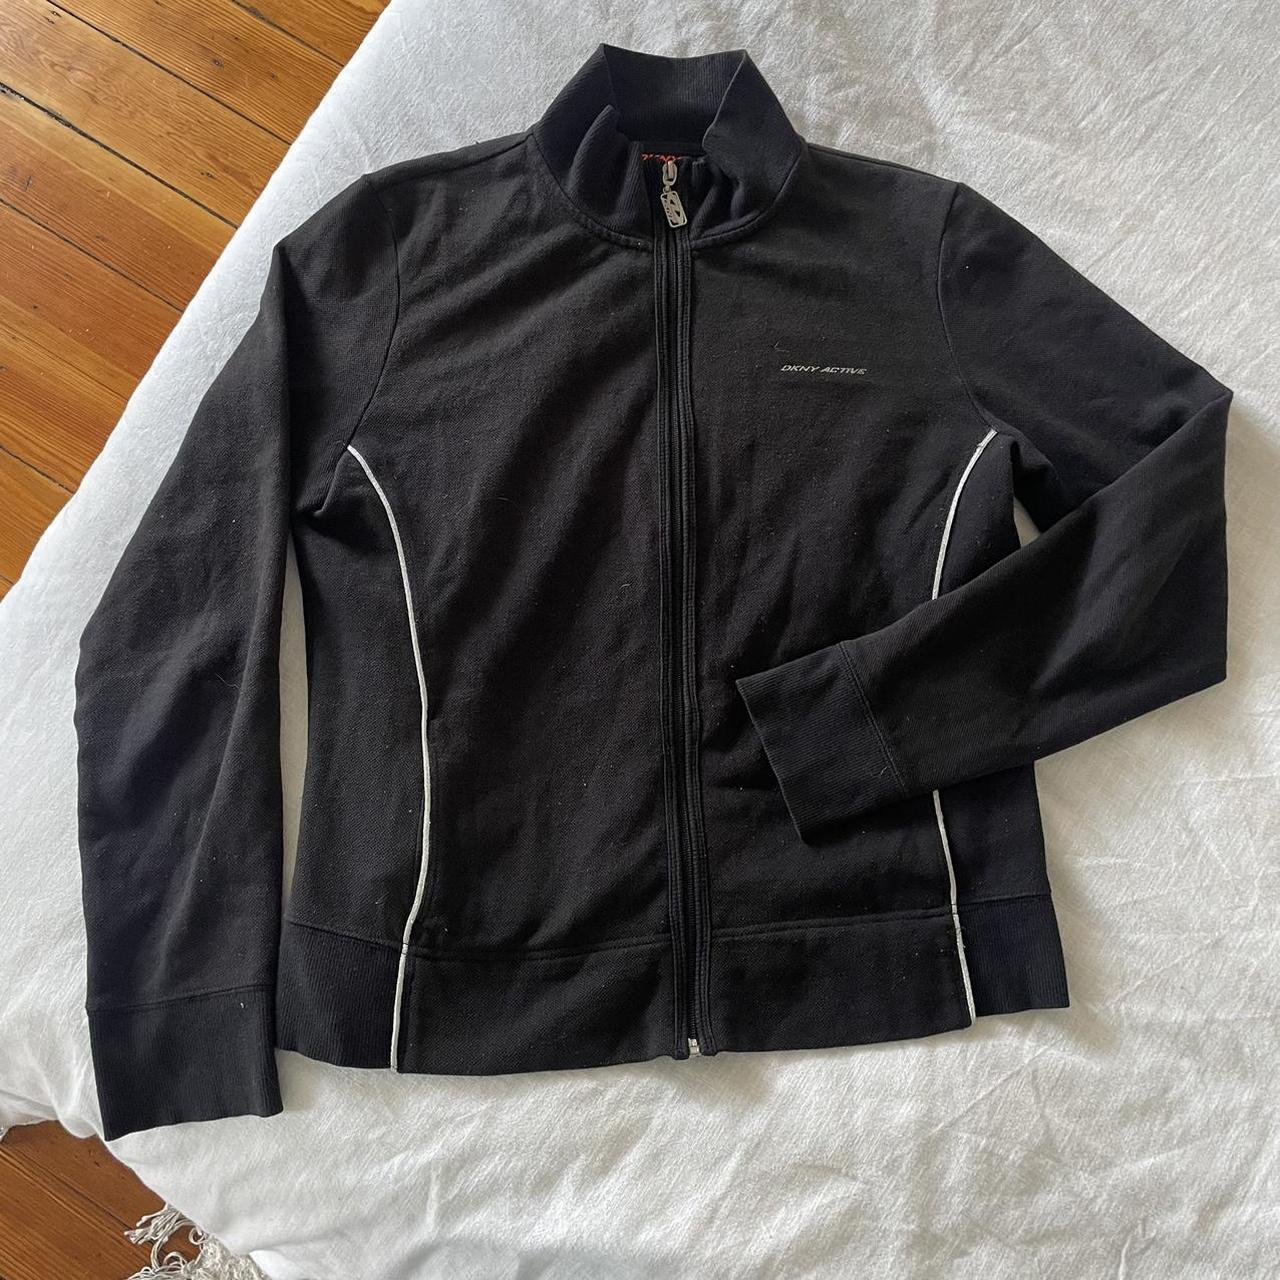 Dkny active ZIPUP black jacket Size: large (but I... - Depop